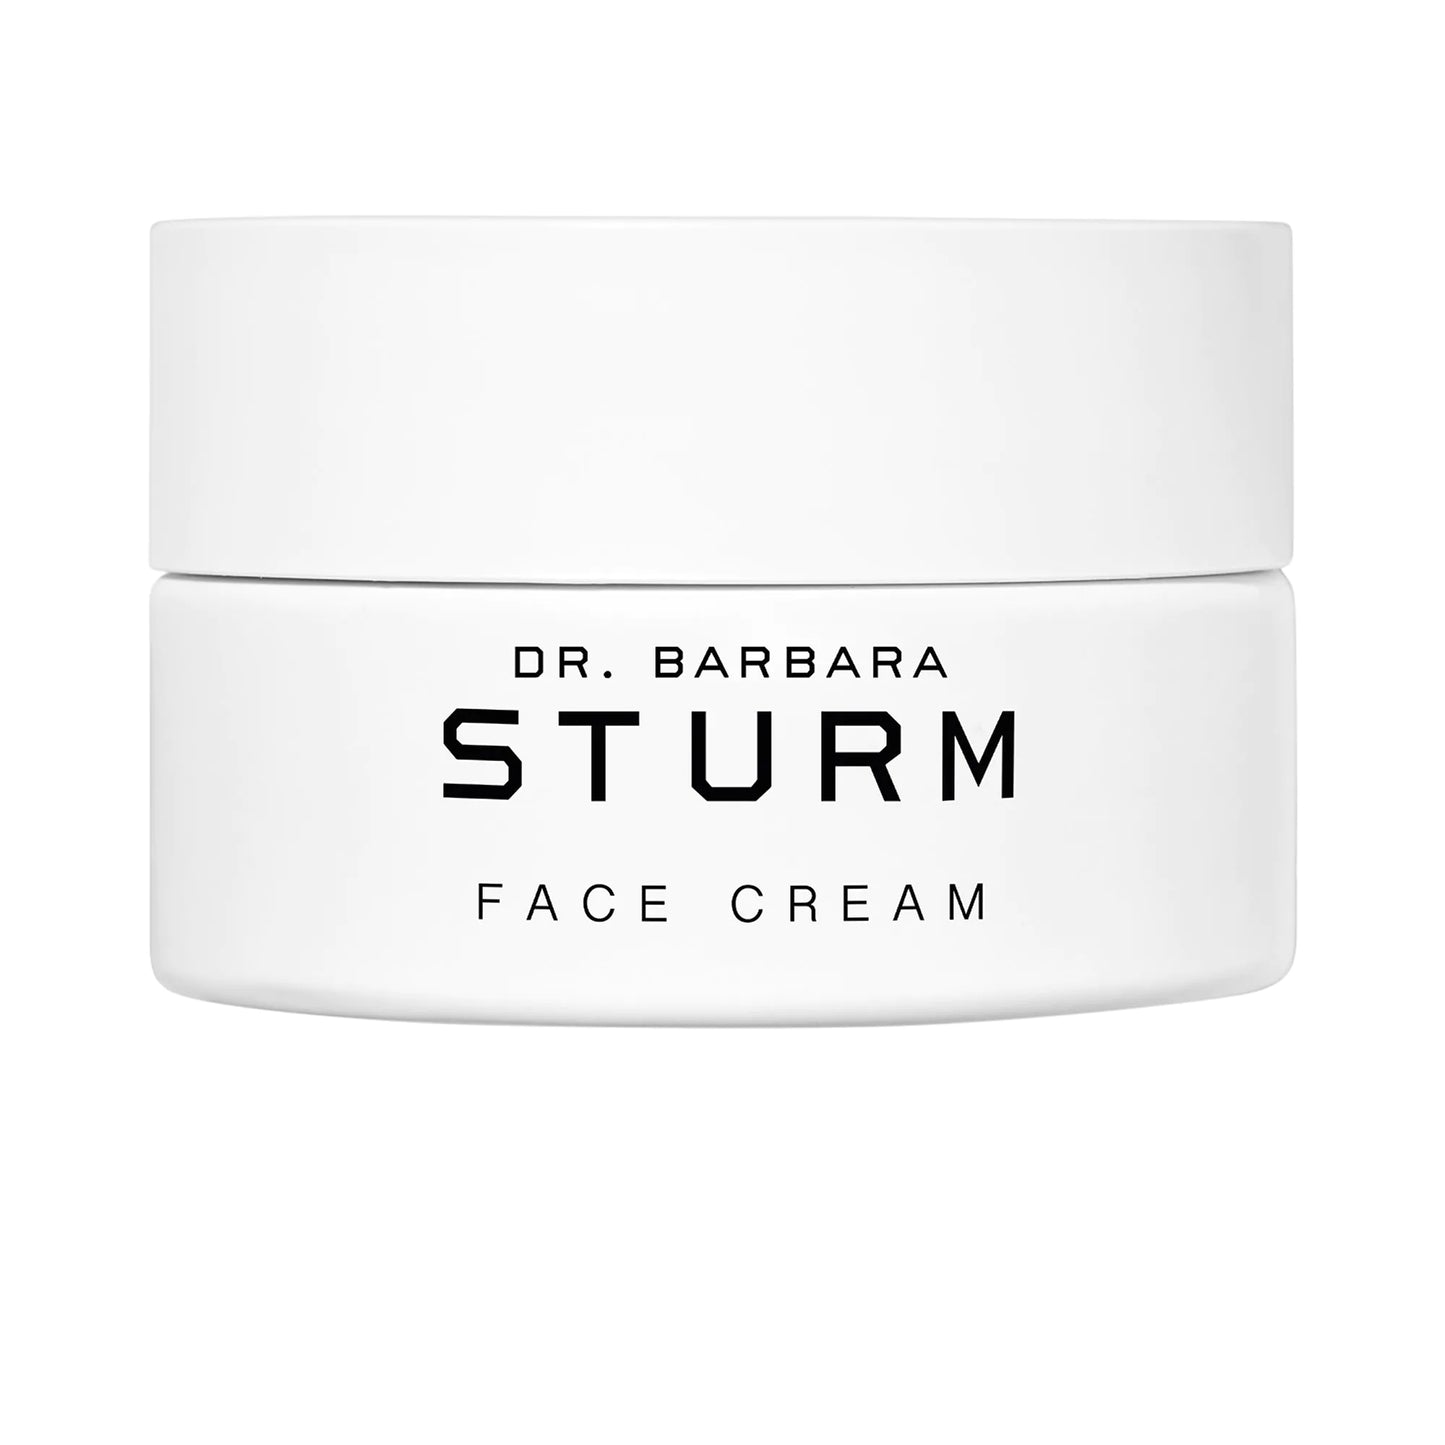 Dr. Barbara Sturm Face Cream 3.5ml